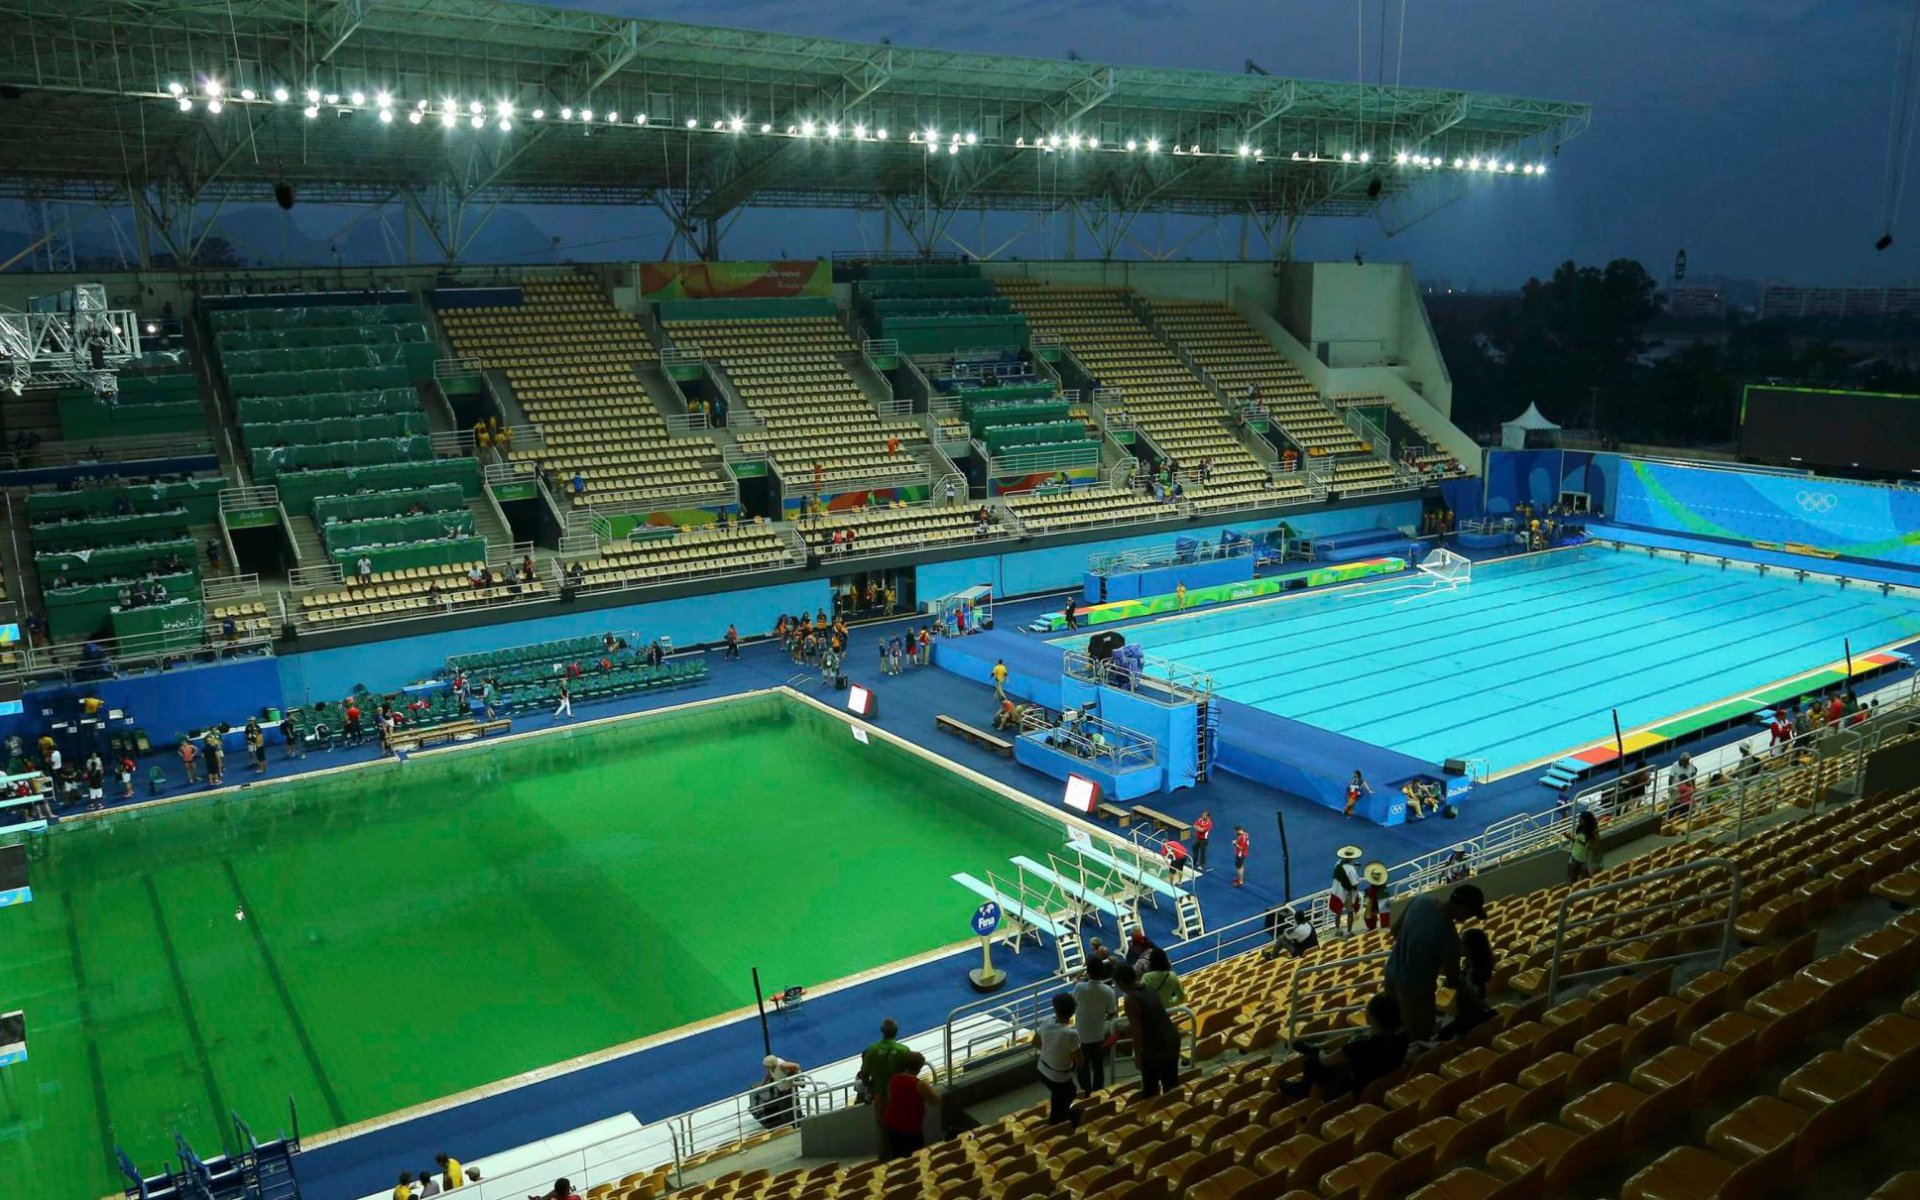 Вода в бассейне на Олимпиаде позеленела во время соревнований. Фото